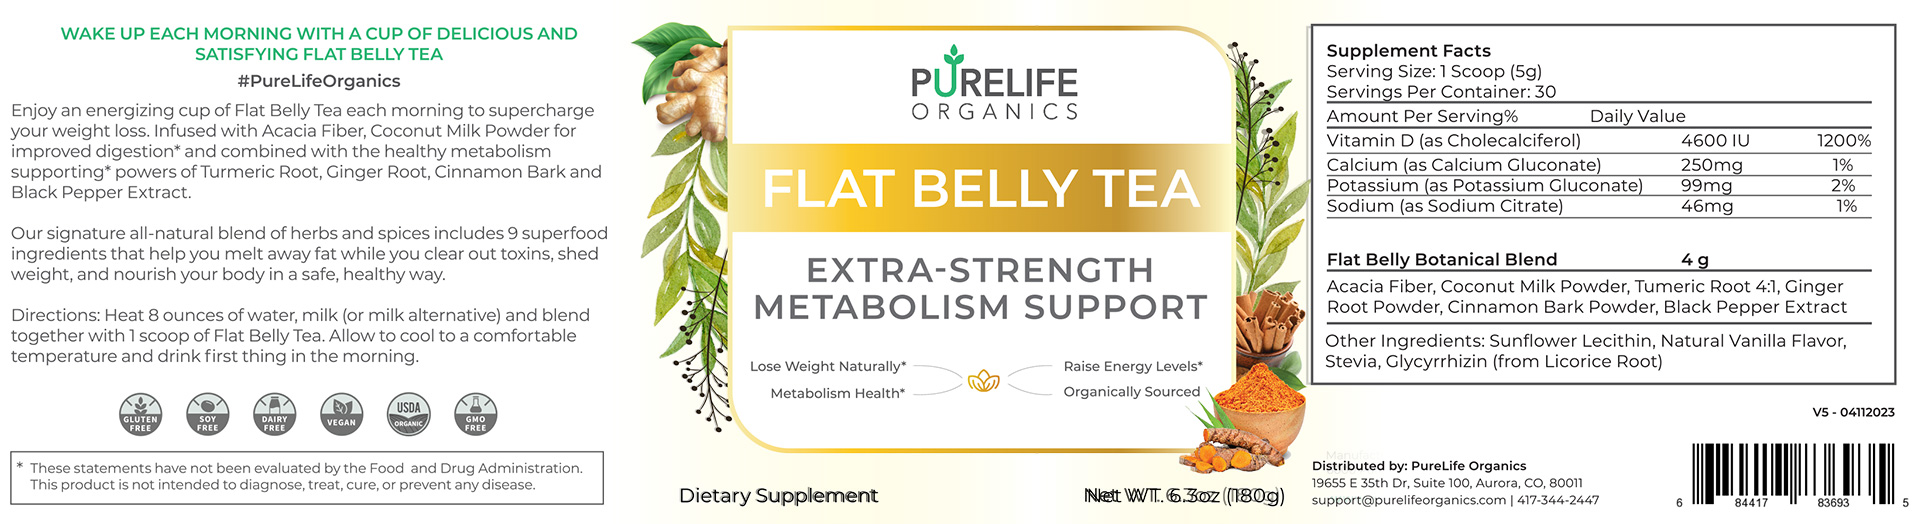 Flat Belly Fix Tea Label Ingredients